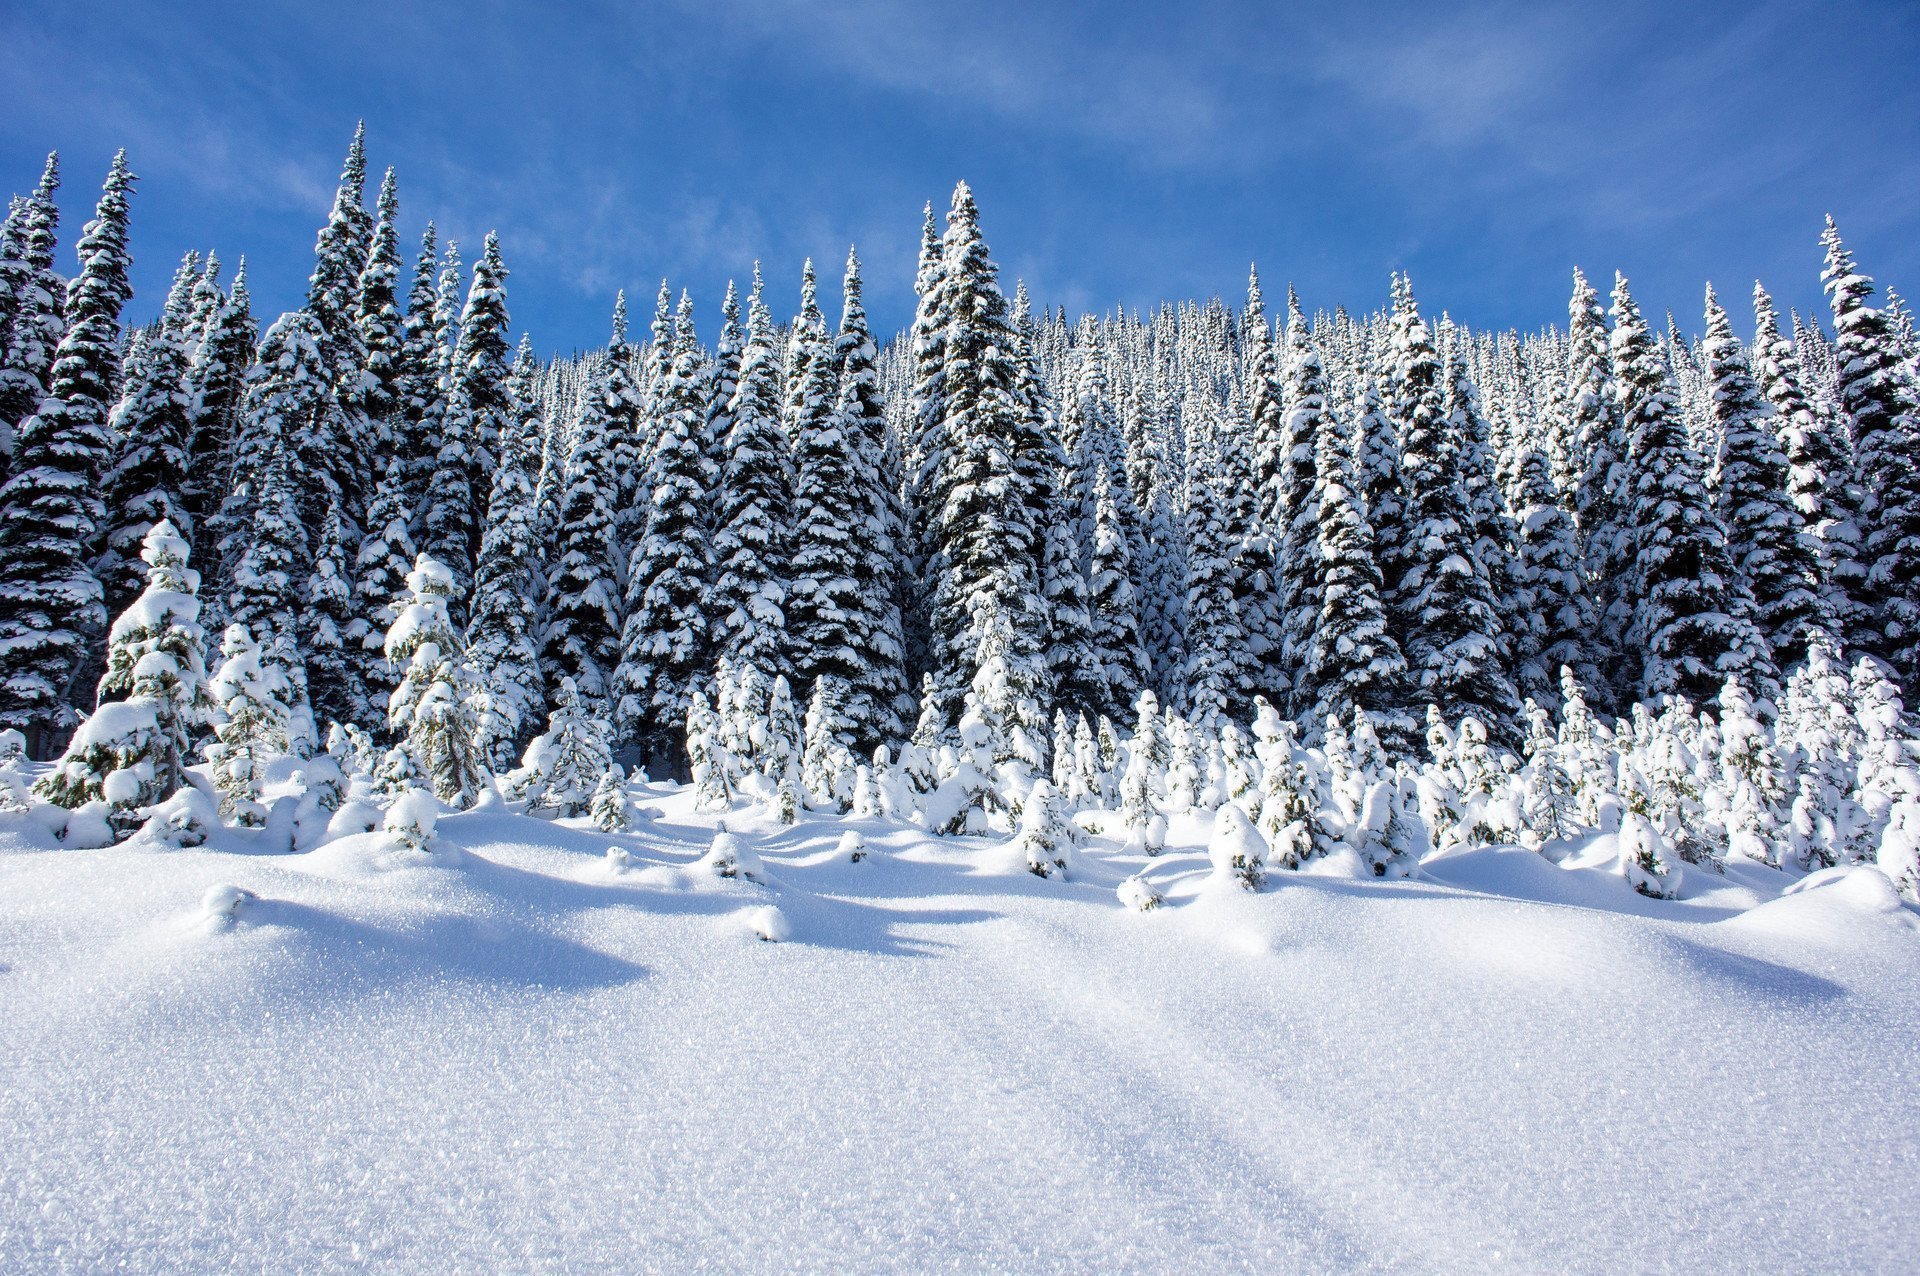 Картинка зимний период. Зимний лес. Снежный лес. Зимой в лесу. Зима снег.